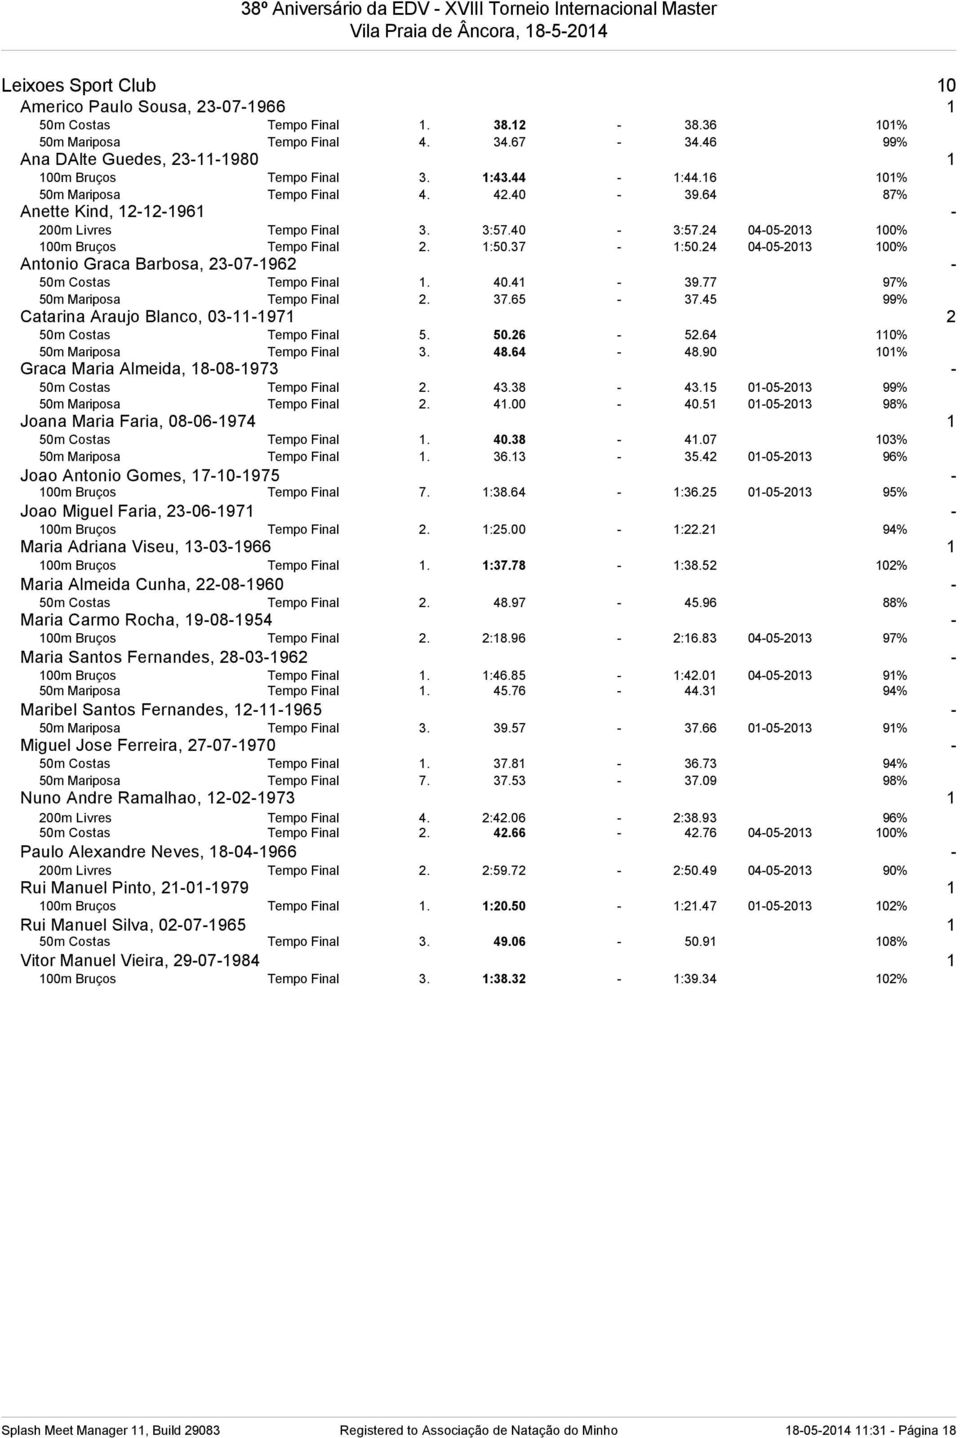 24 04-05-2013 100% Antonio Graca Barbosa, 23-07-1962-50m Costas Tempo Final 1. 40.41-39.77 97% 50m Mariposa Tempo Final 2. 37.65-37.